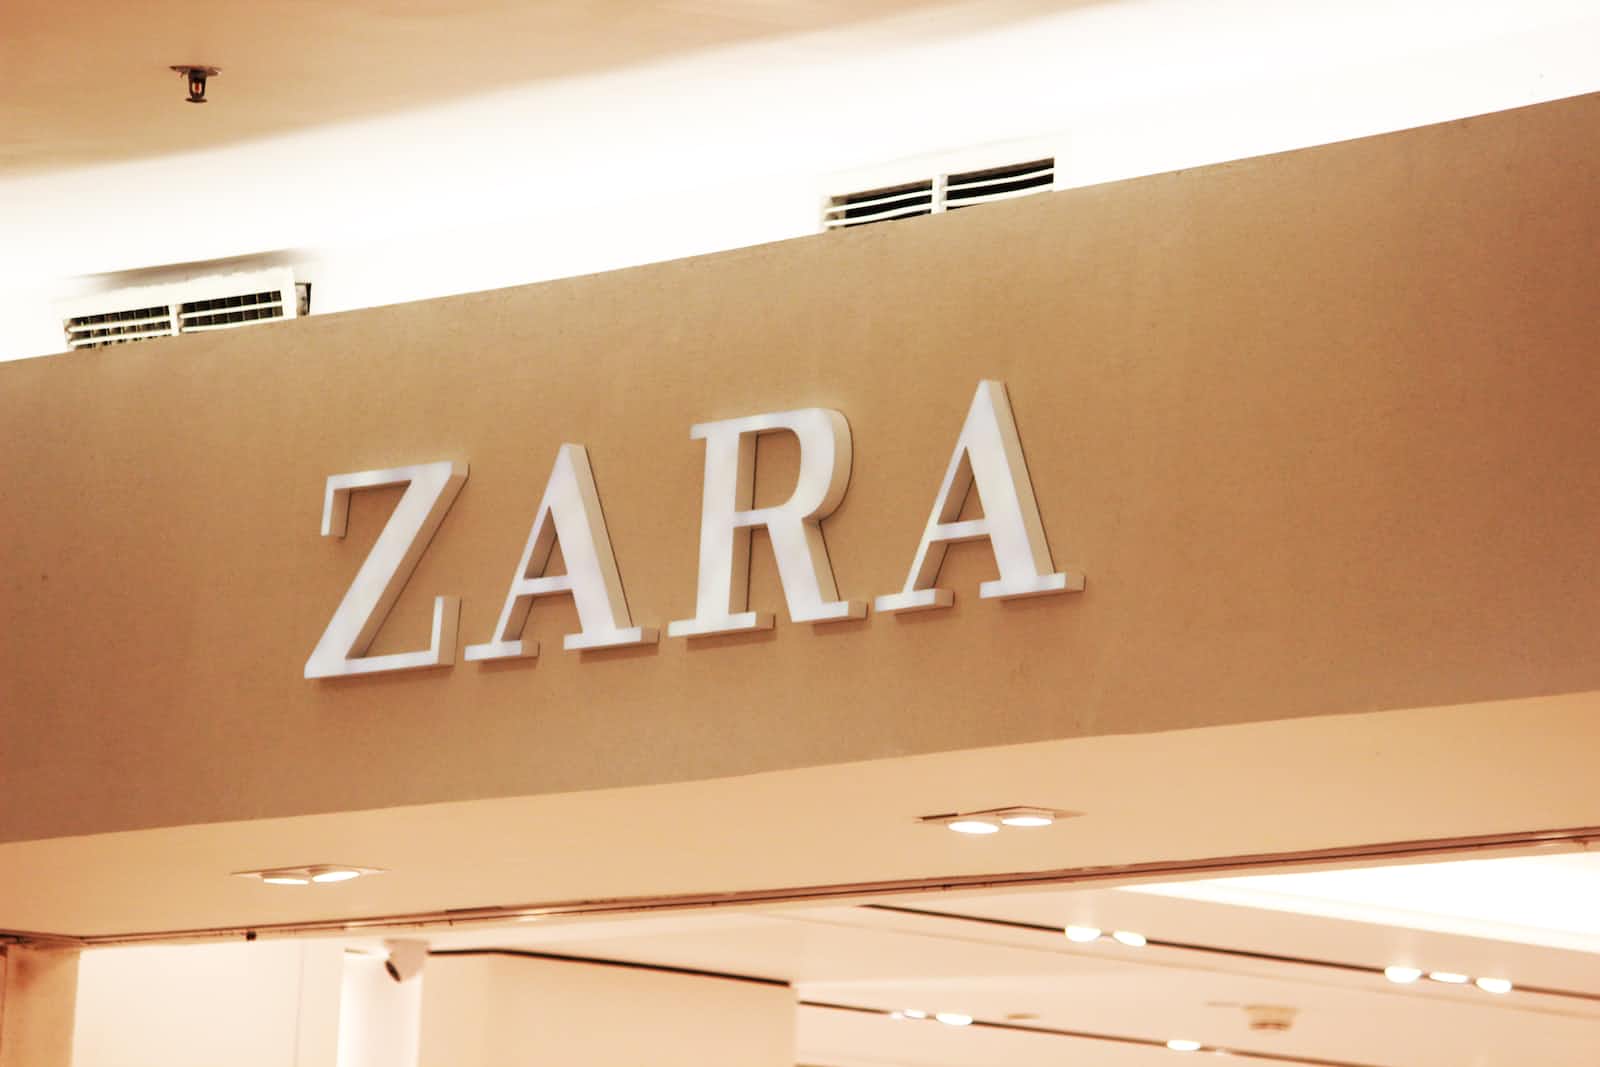 House of Zana triumphs over Zara in trademark battle inspiring hope for small